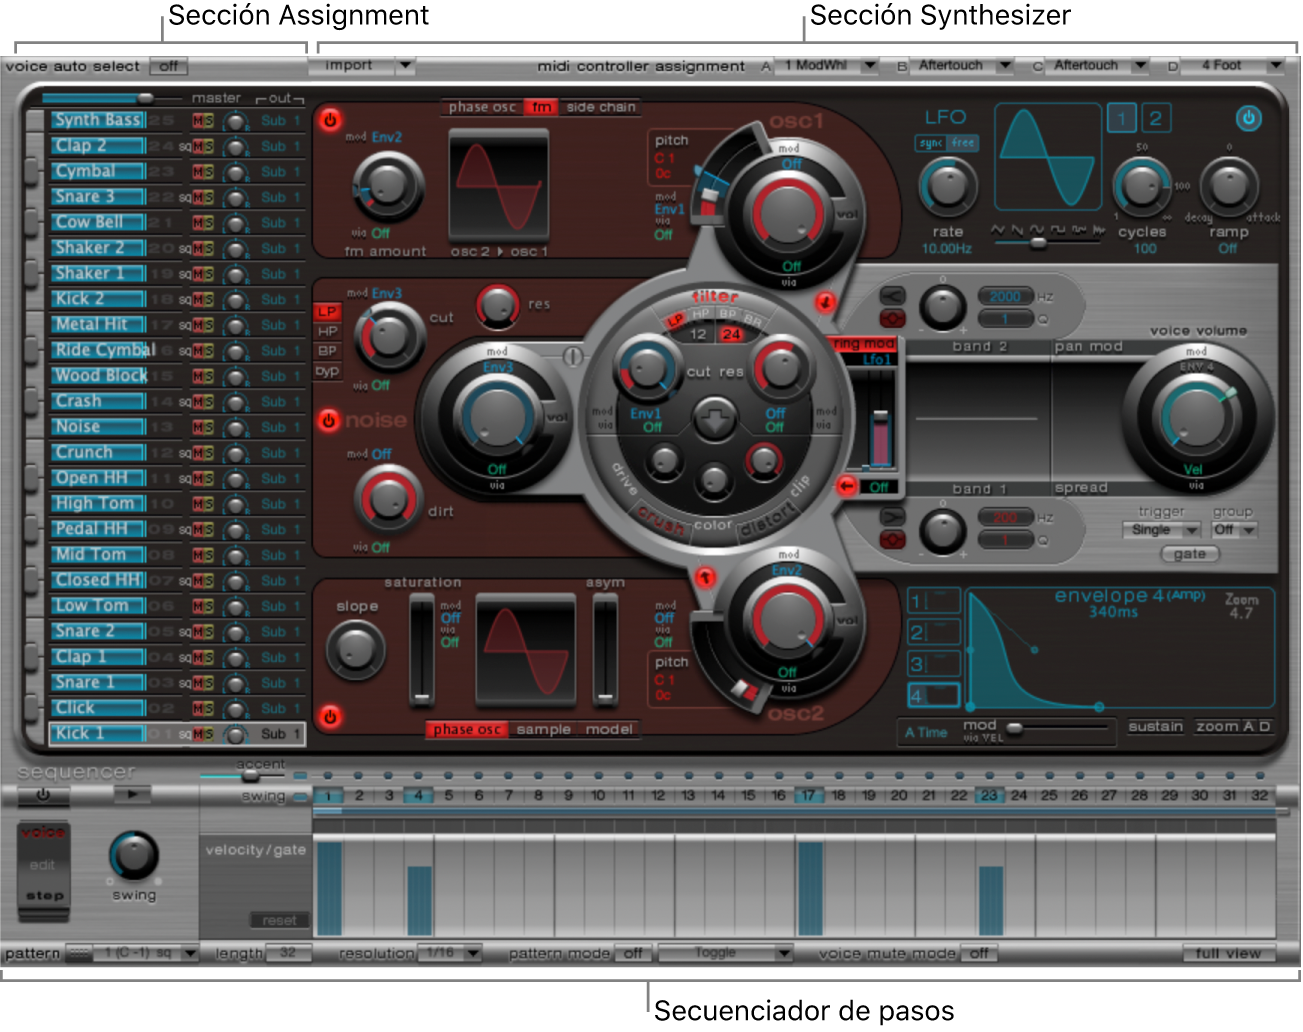 Figure. Ultrabeat window, showing main interface areas.